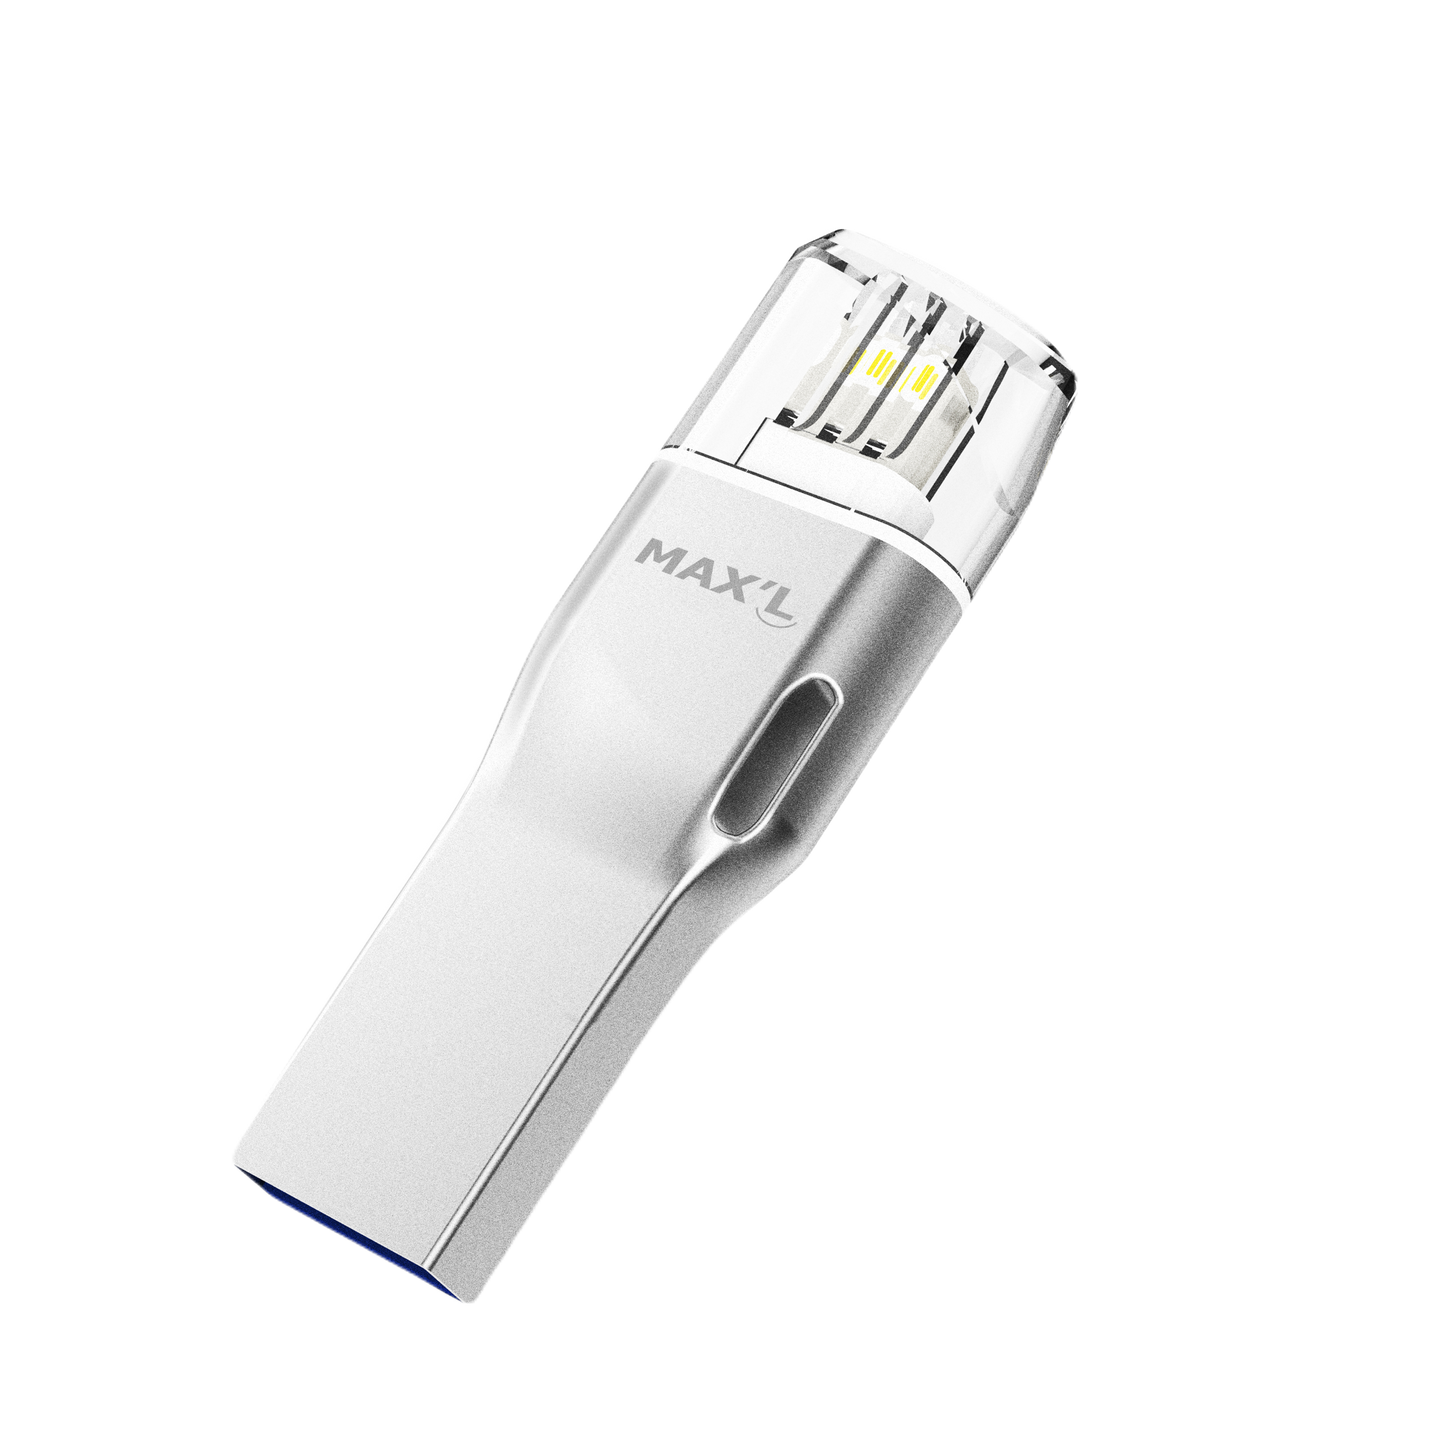 Clé USB OTG Lightning MAX'L